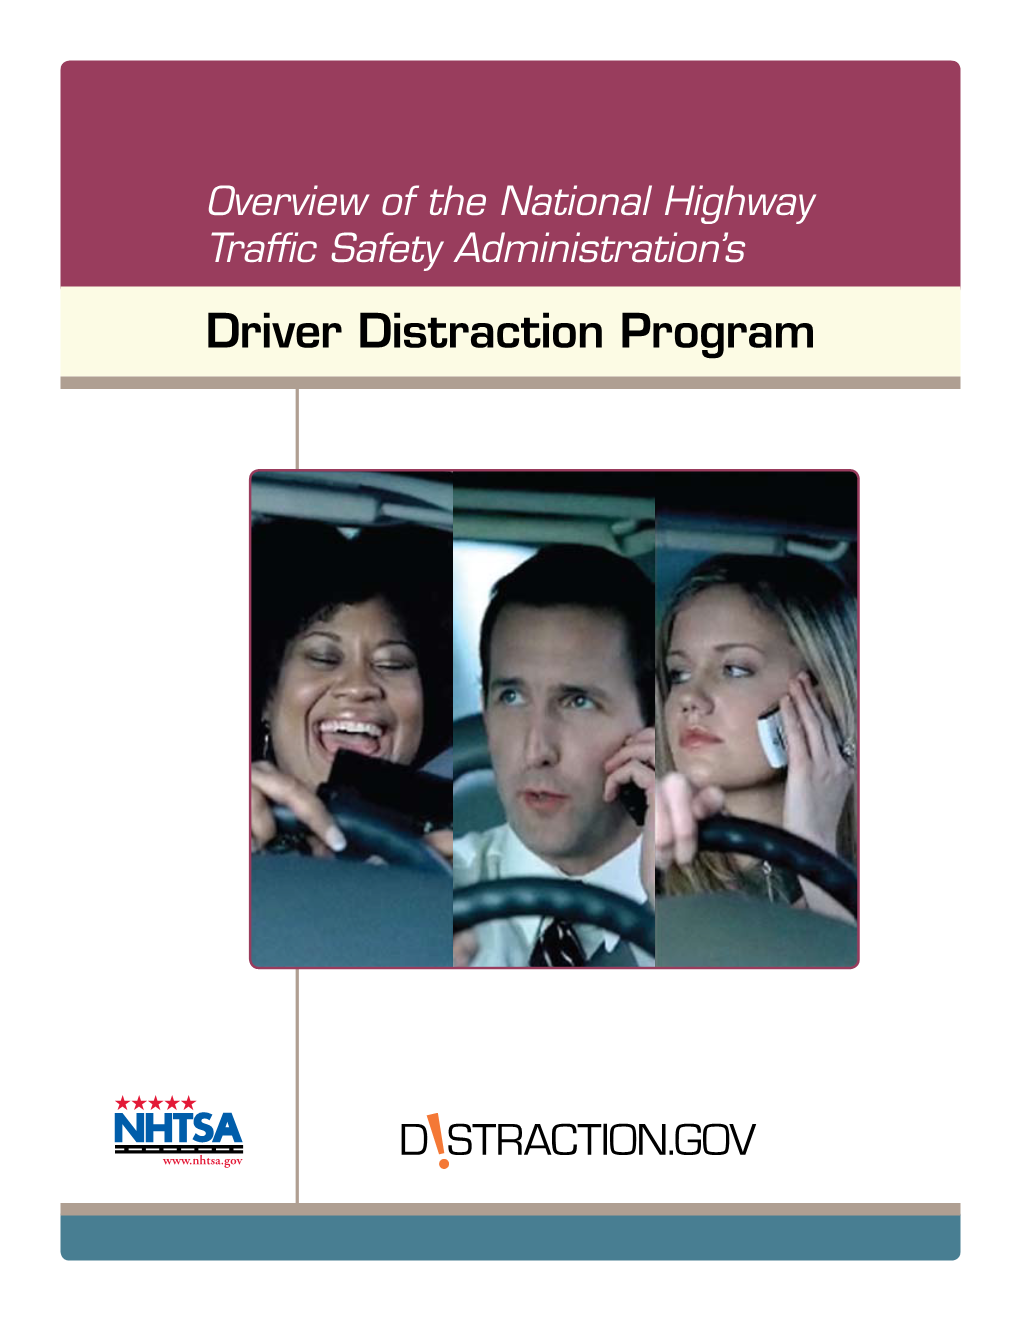 Driver Distraction Program